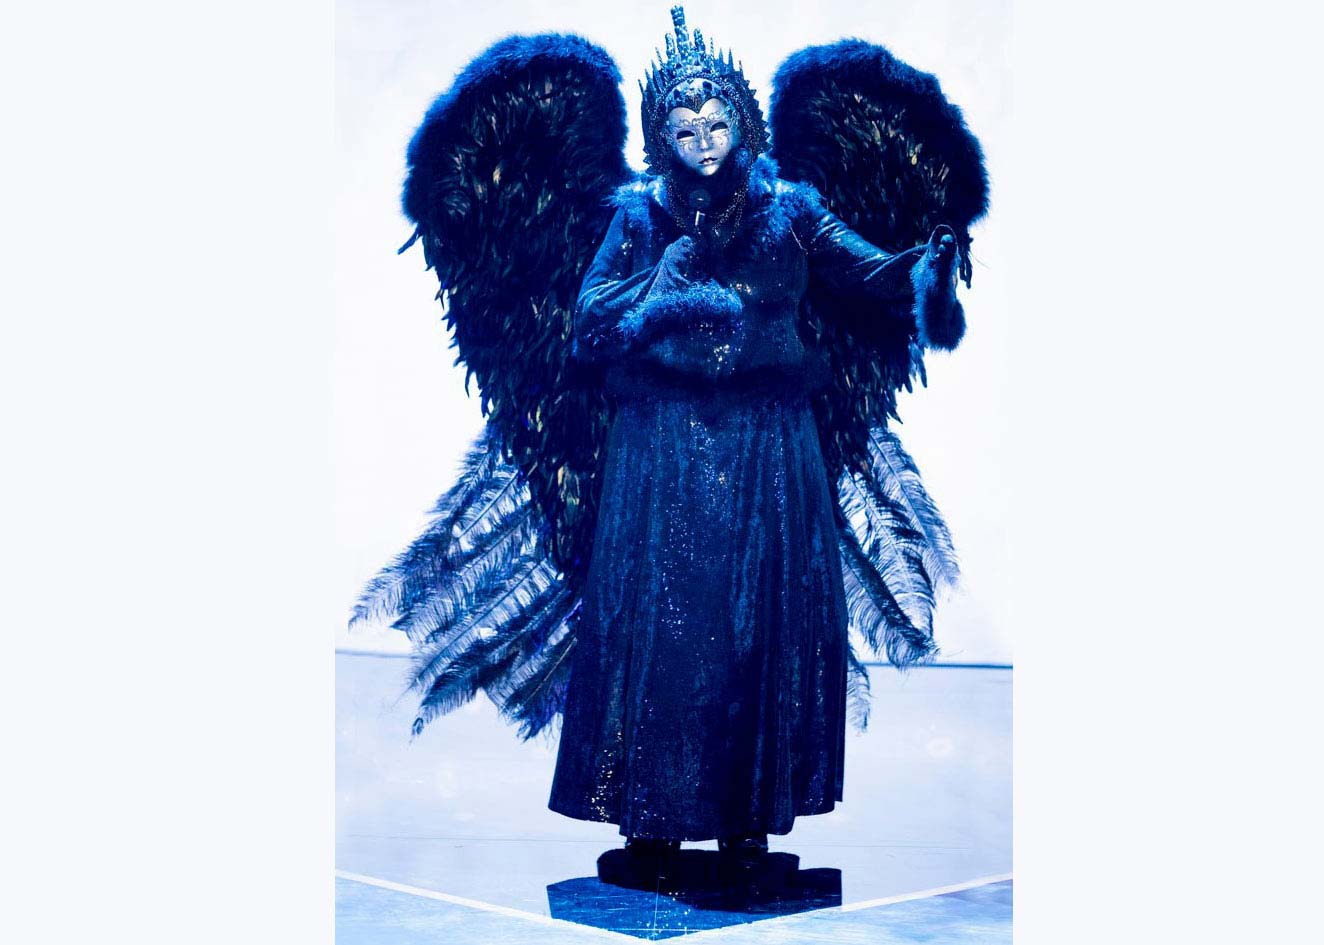 black angel wings masked singer kostuum maker nederland Tentacle Studio 